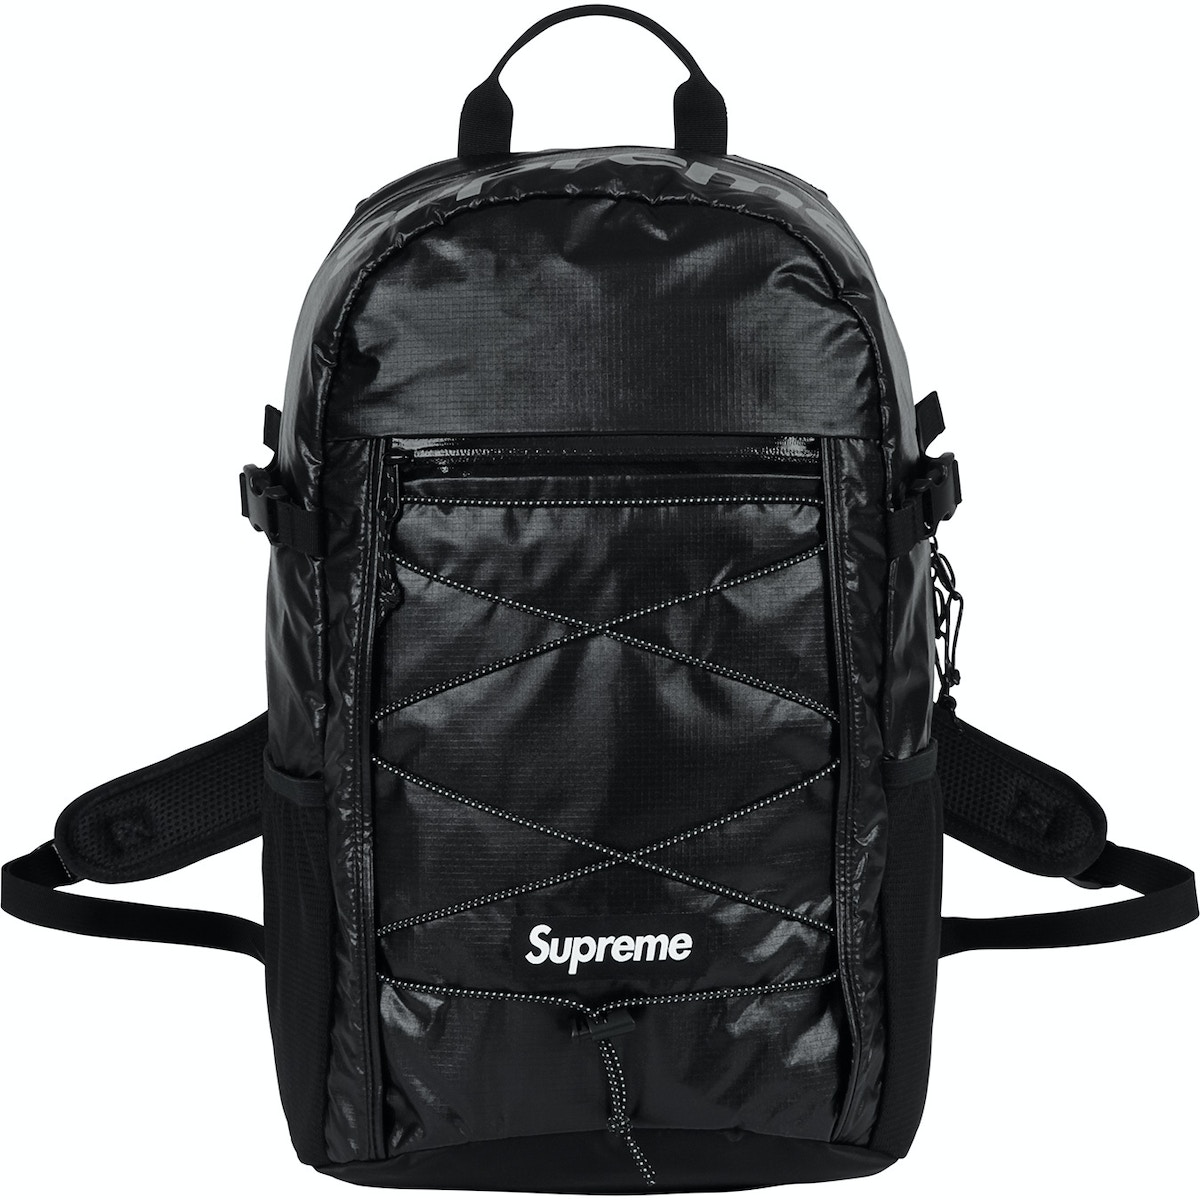 Supreme FW17 Backpack Black - FW17